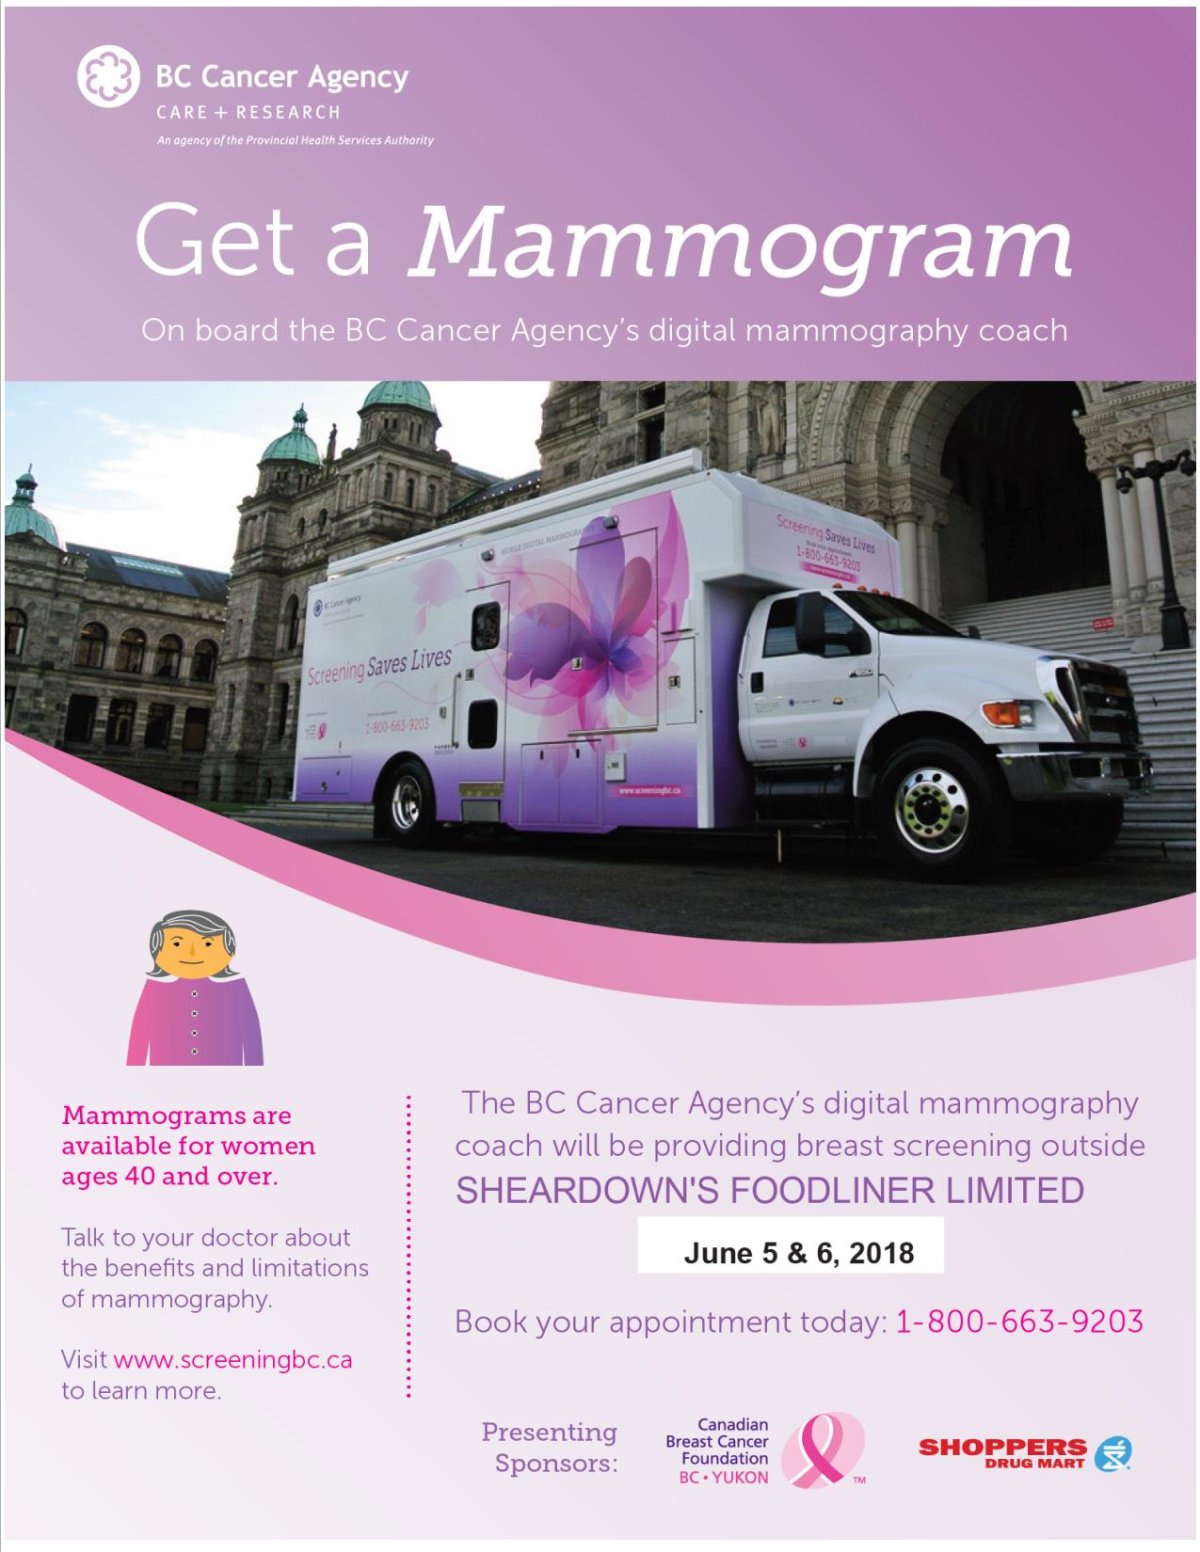 Get a Mammogram - image